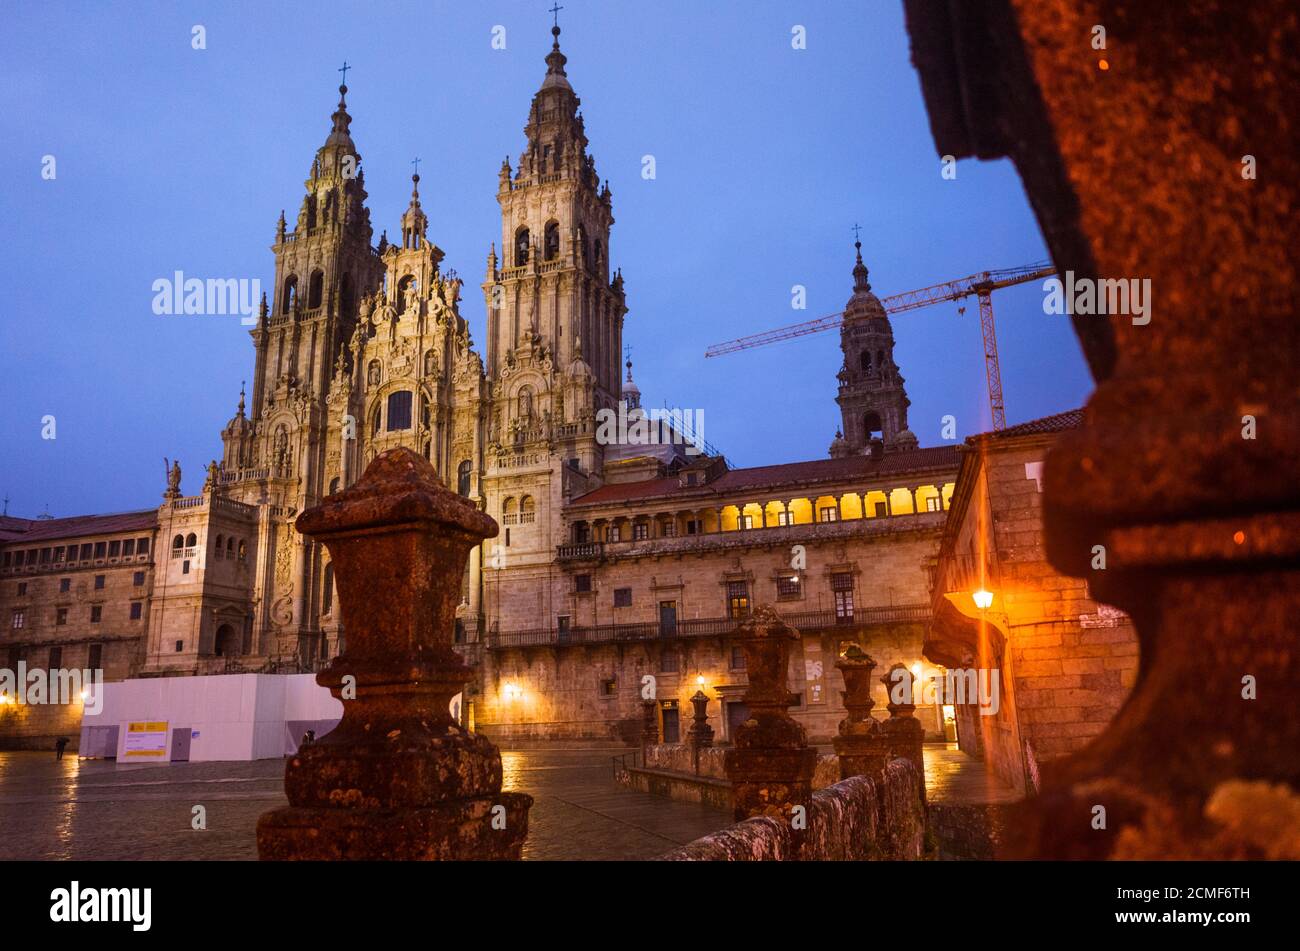 Santiago de Compostela, A Coruña Provinz, Galicien, Spanien - 12. Februar 2020 : beleuchtete barocke Fassade der Kathedrale auf dem Obradoiro Platz. Stockfoto